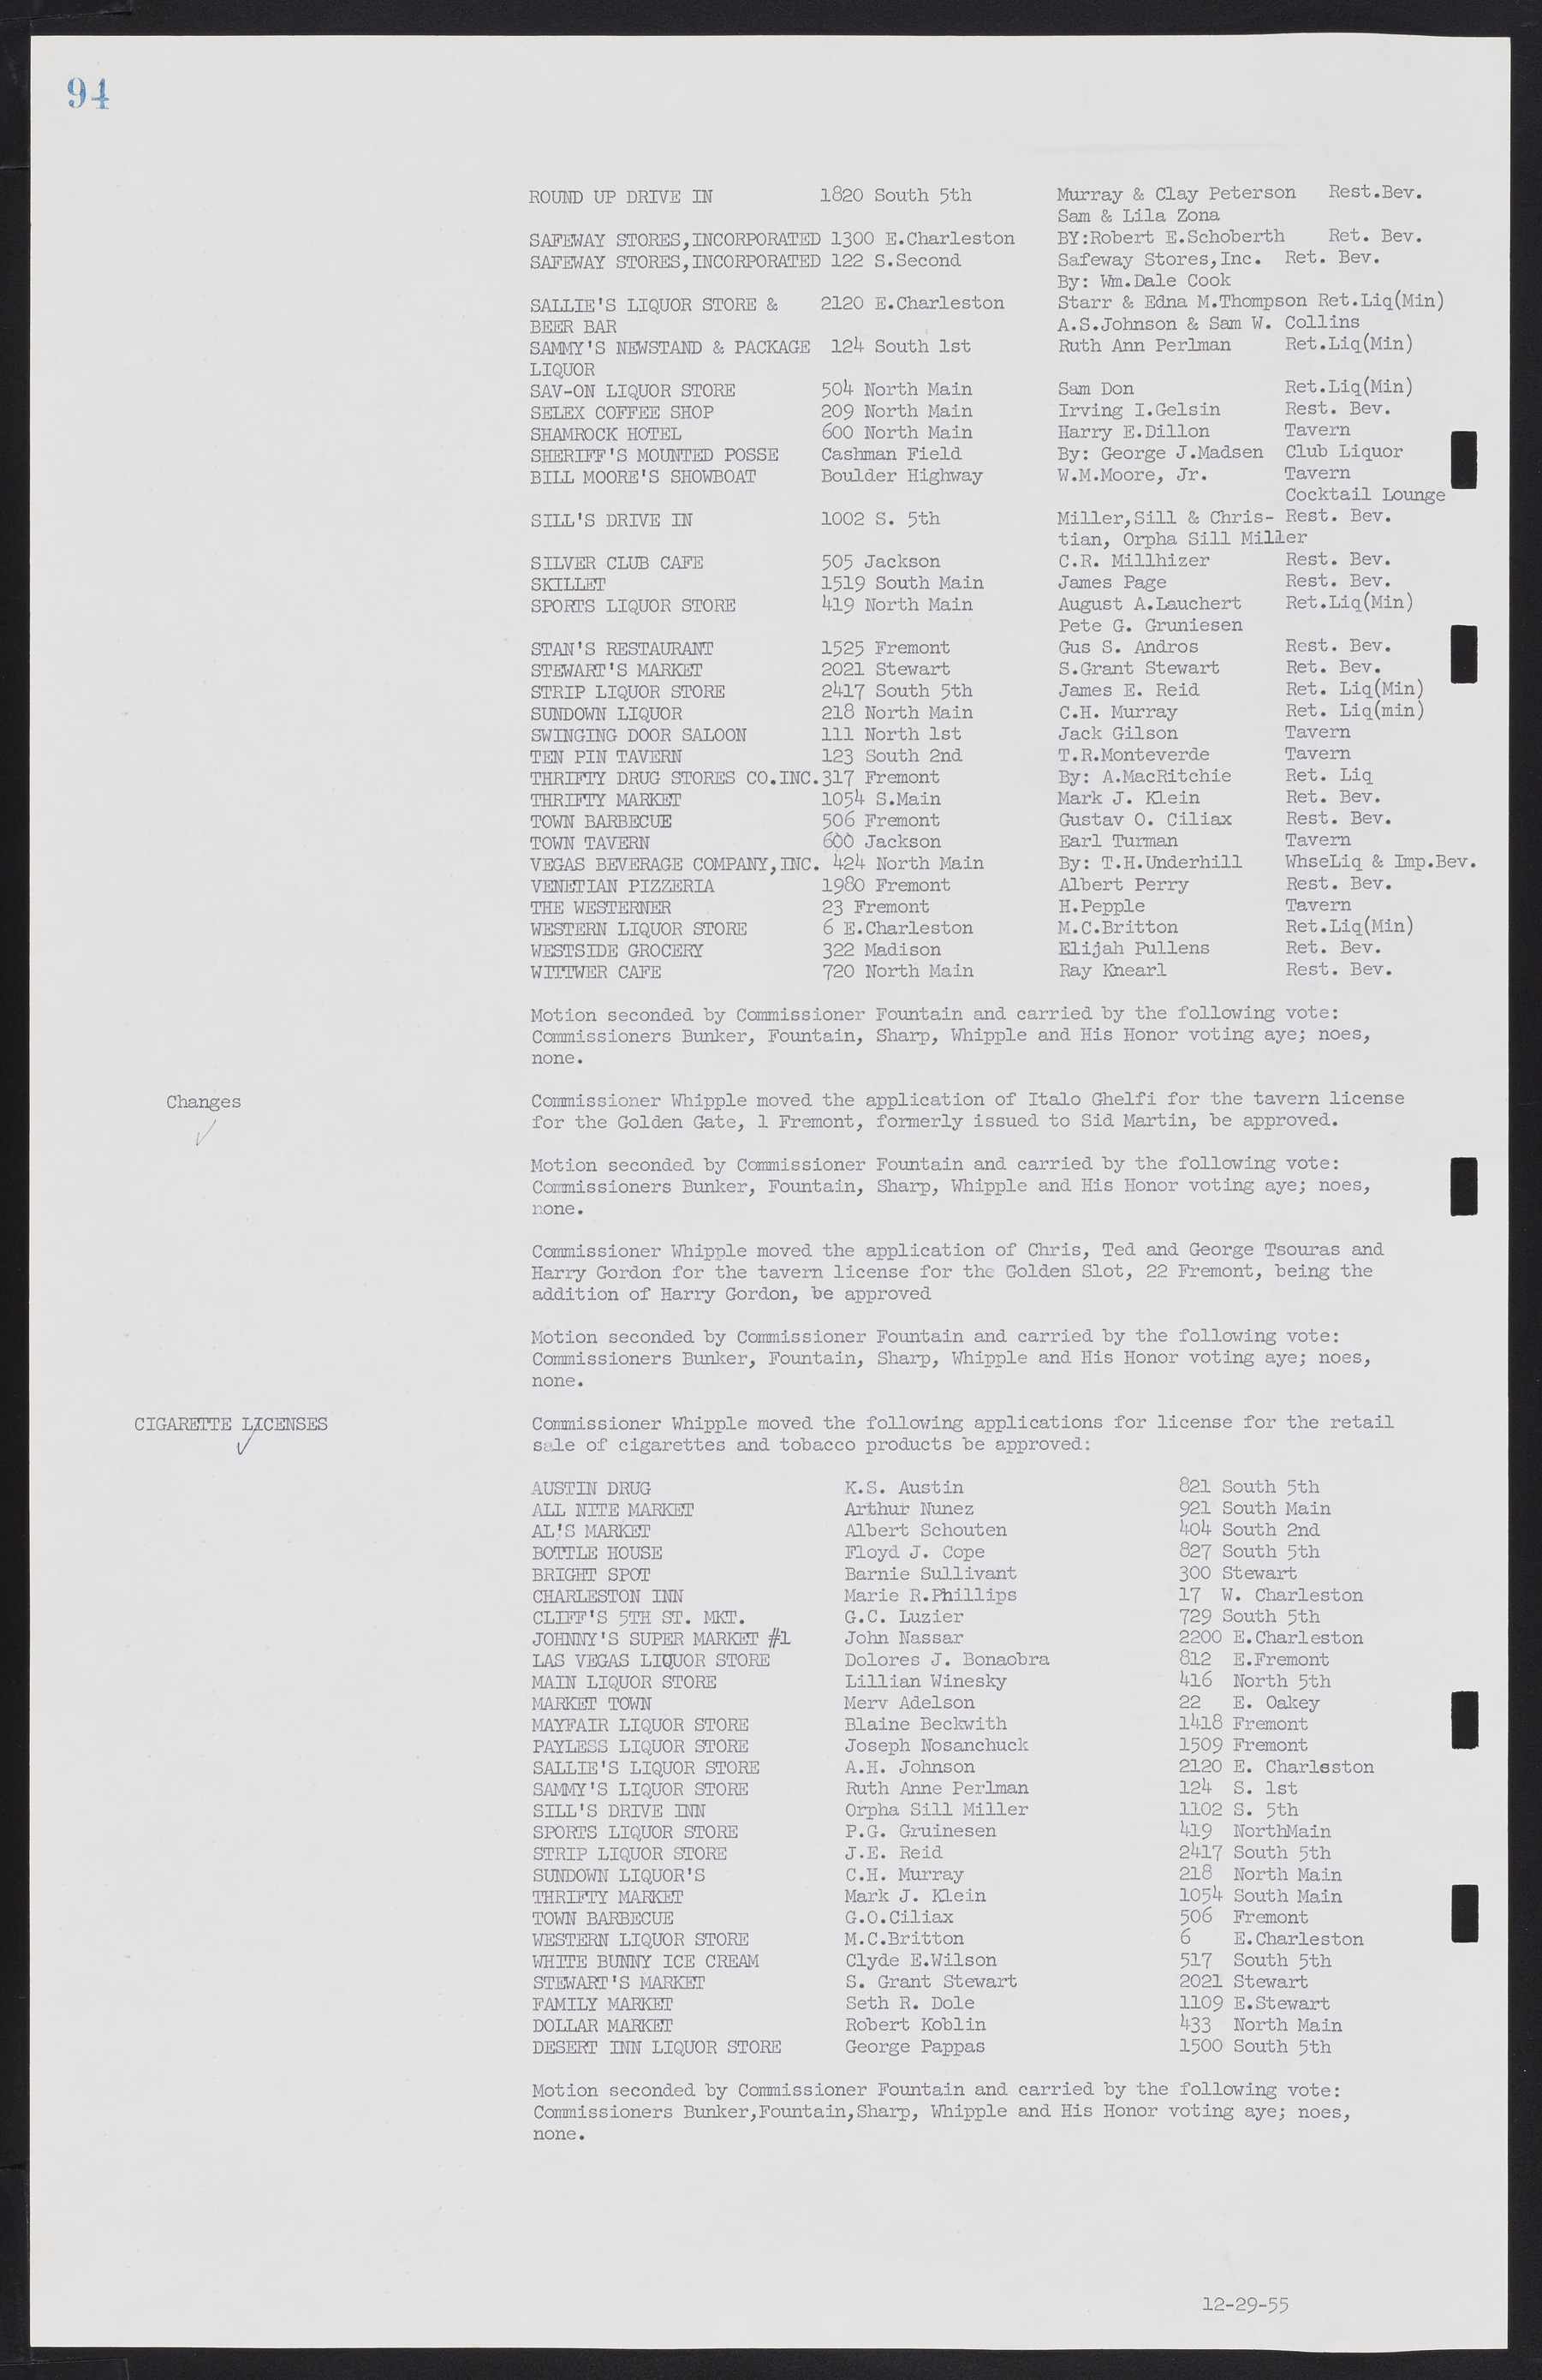 Las Vegas City Commission Minutes, September 21, 1955 to November 20, 1957, lvc000010-104